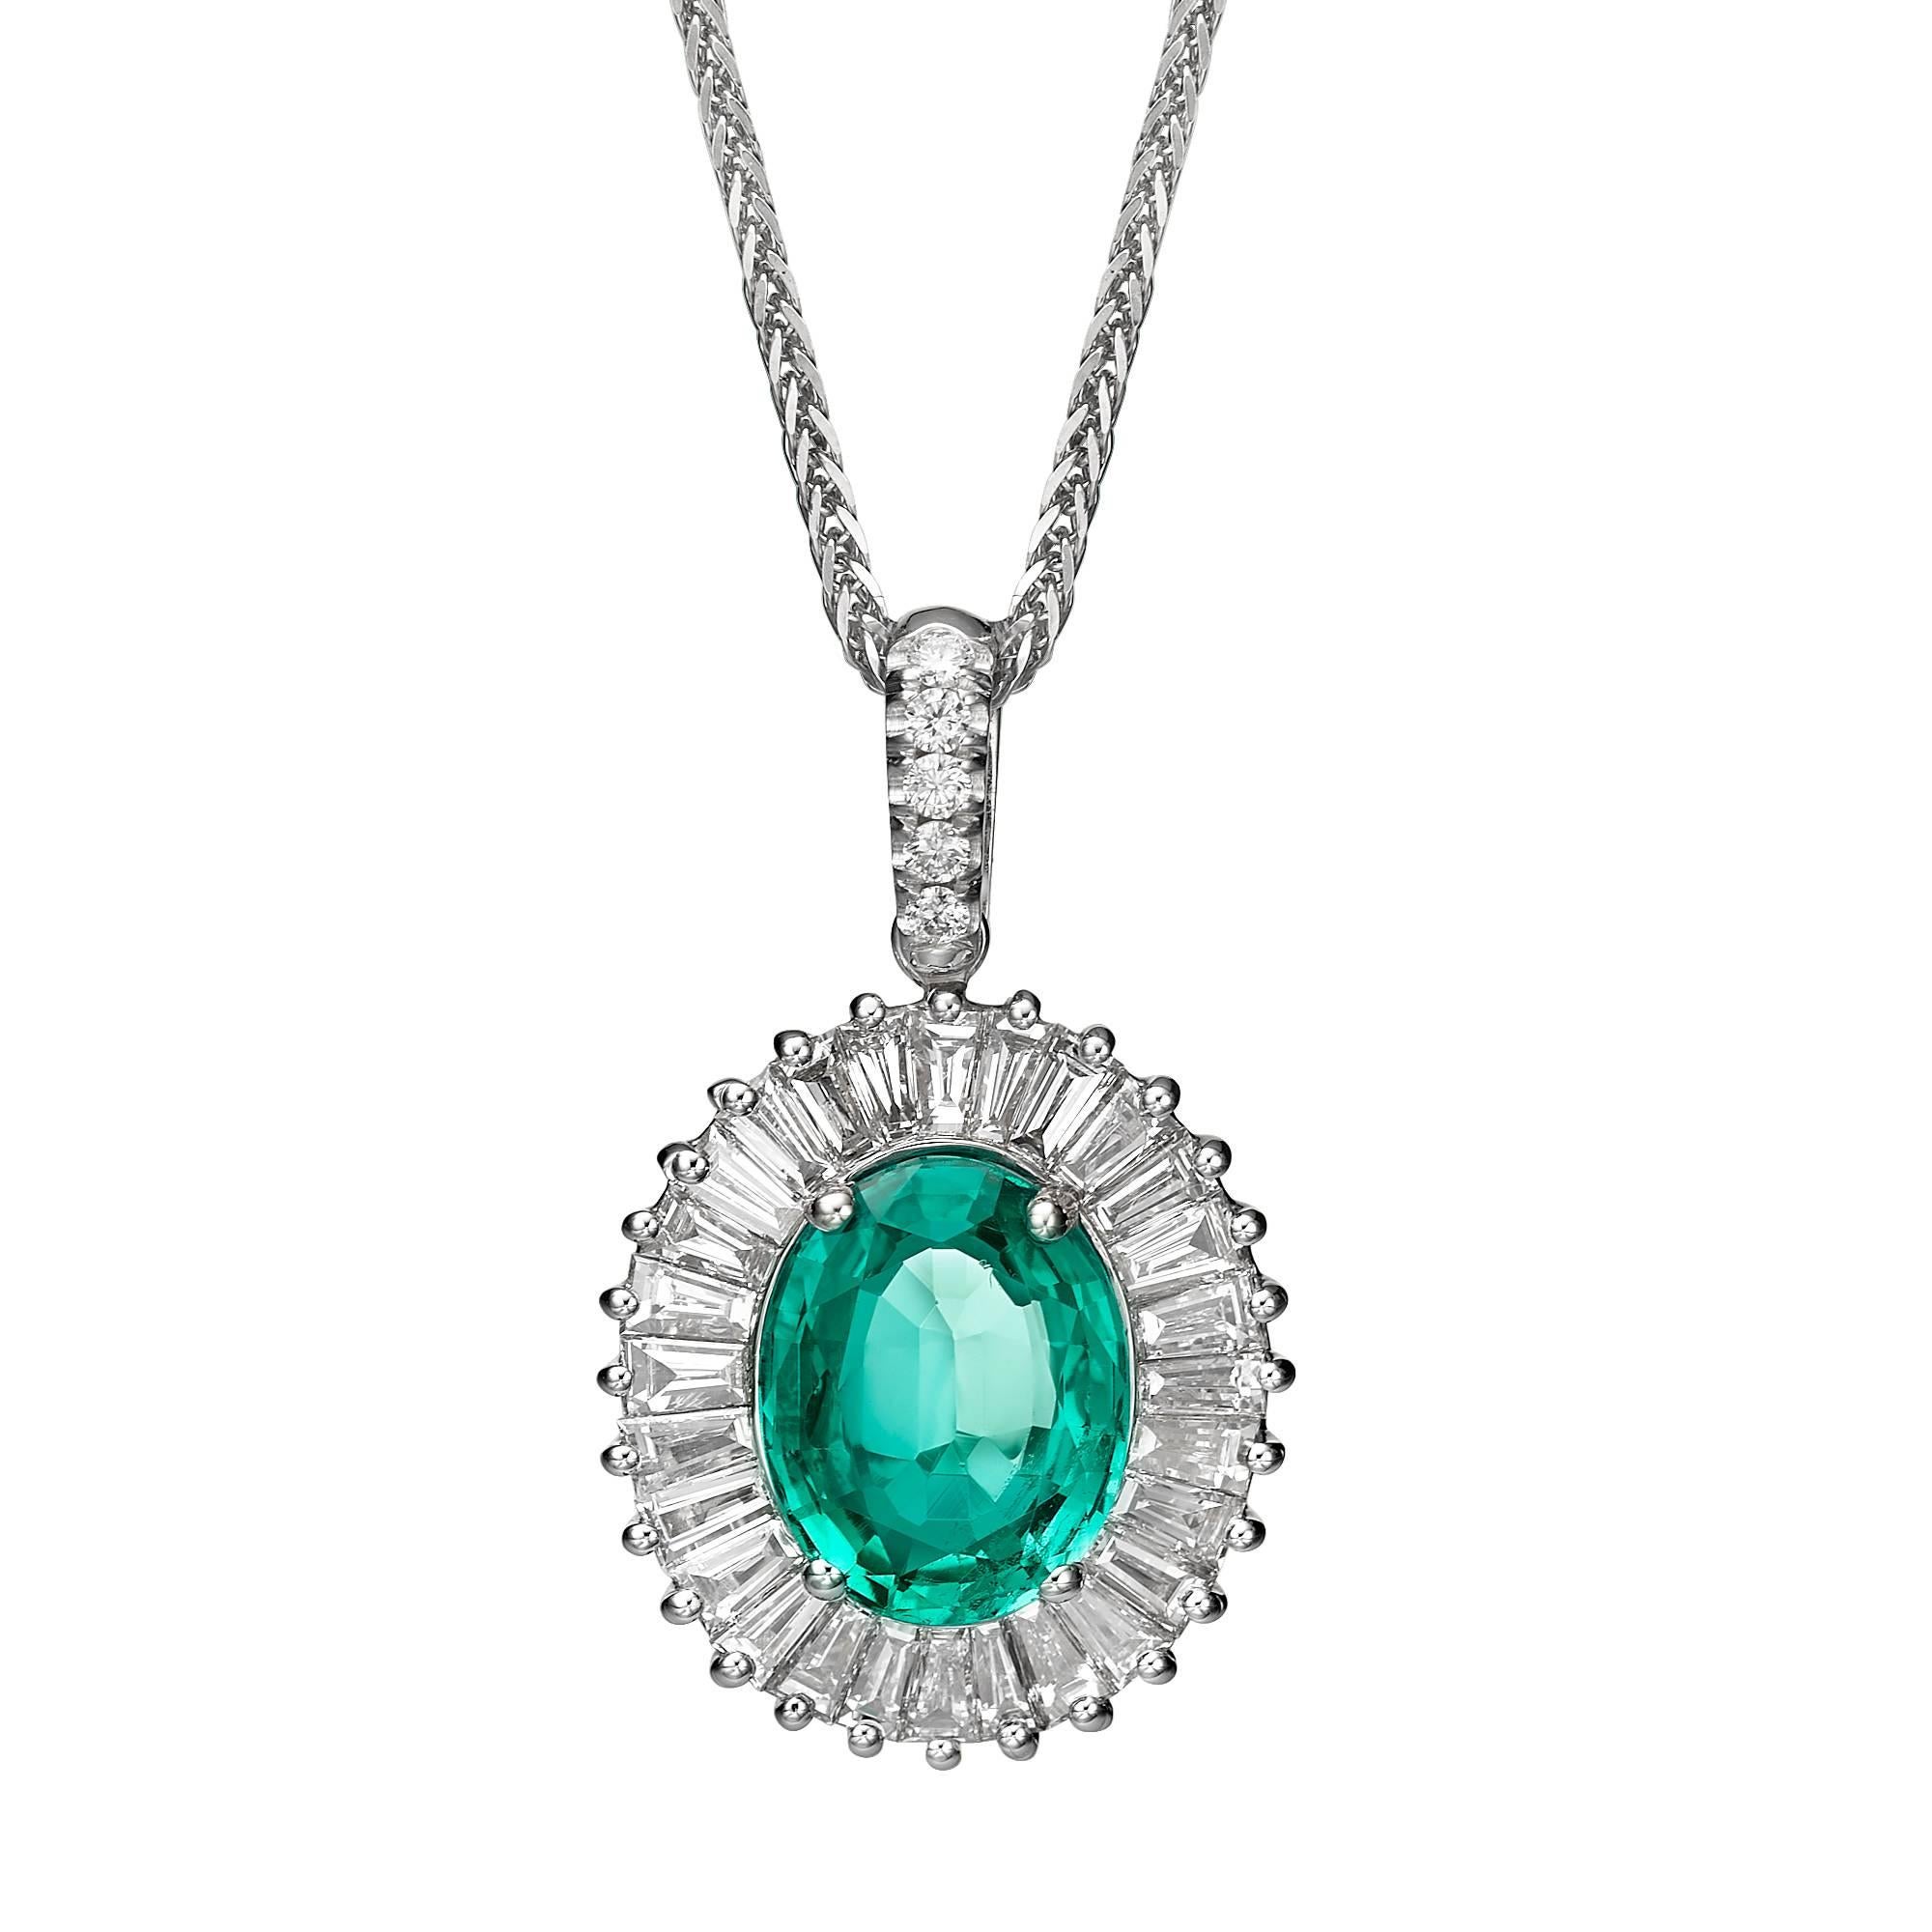  2.18 Carat Natural Emerald & Diamond Ballerina Style Pendant Necklace